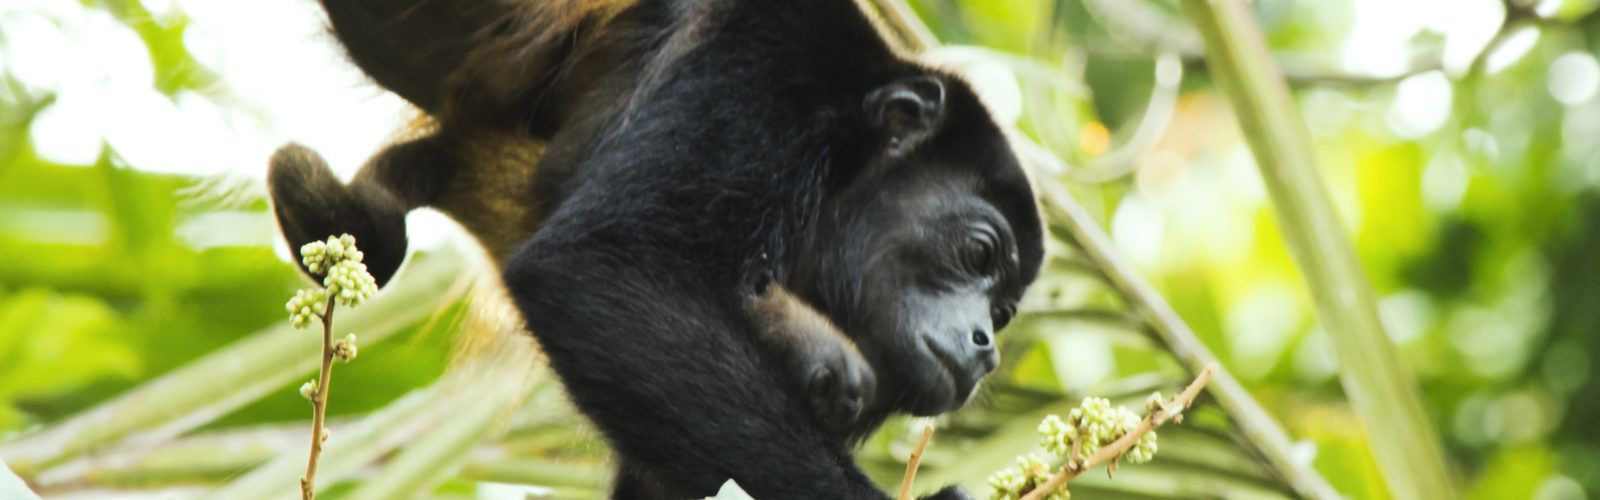 tortuguero-national-park-monkey